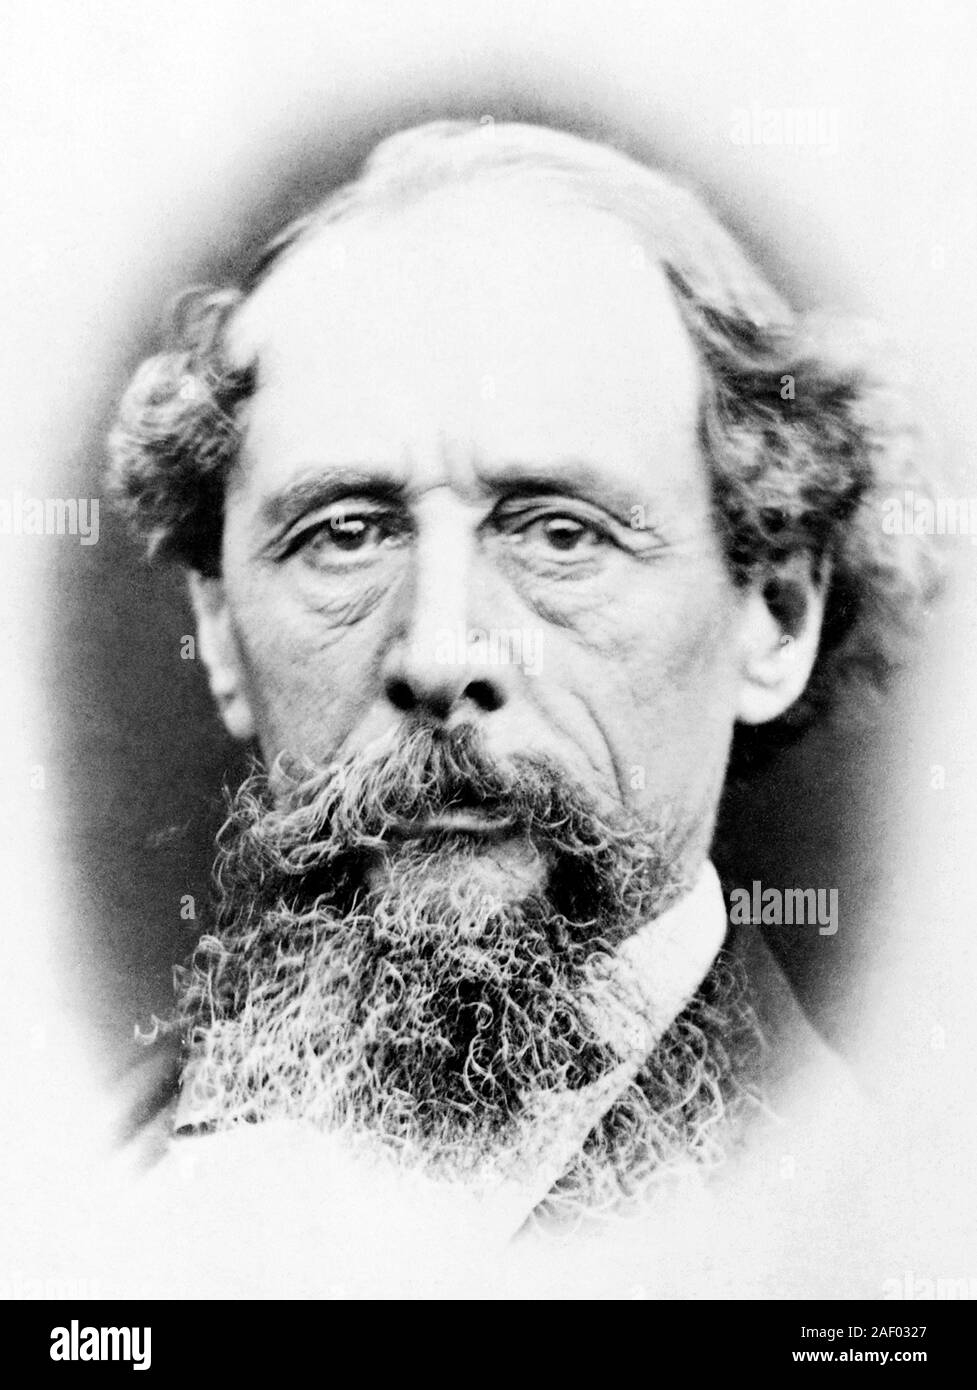 Jahrgang Porträt Foto des Englischen Autors Charles Dickens (1812 - 1870). Foto ca. 1865. Stockfoto